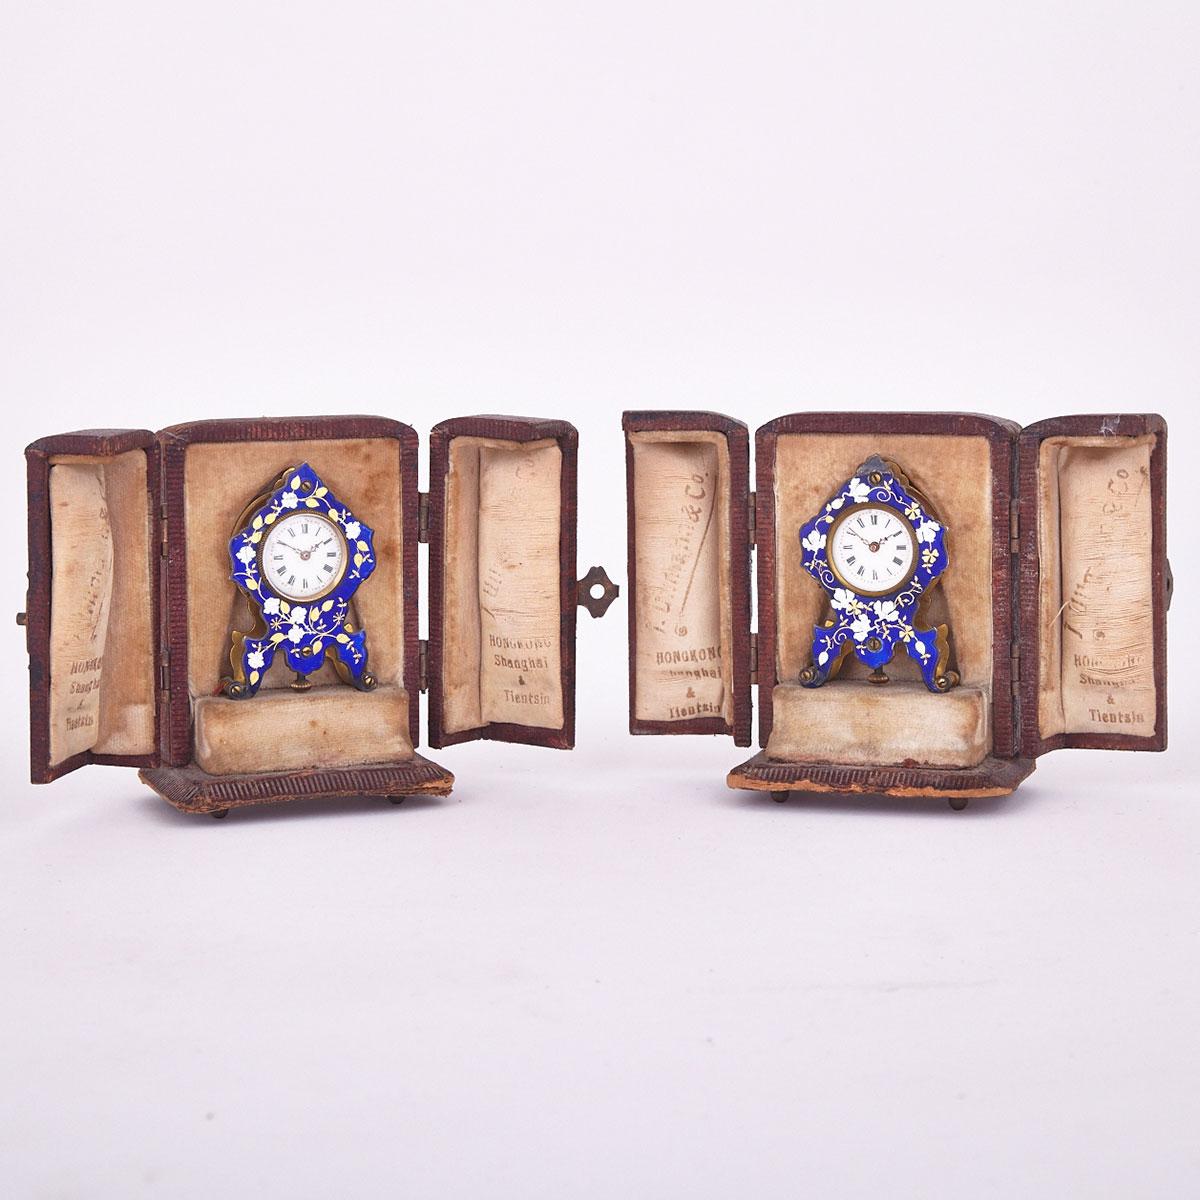 Pair of Swiss Enamelled Gilt Metal Miniature Bracket Clocks, 19th century